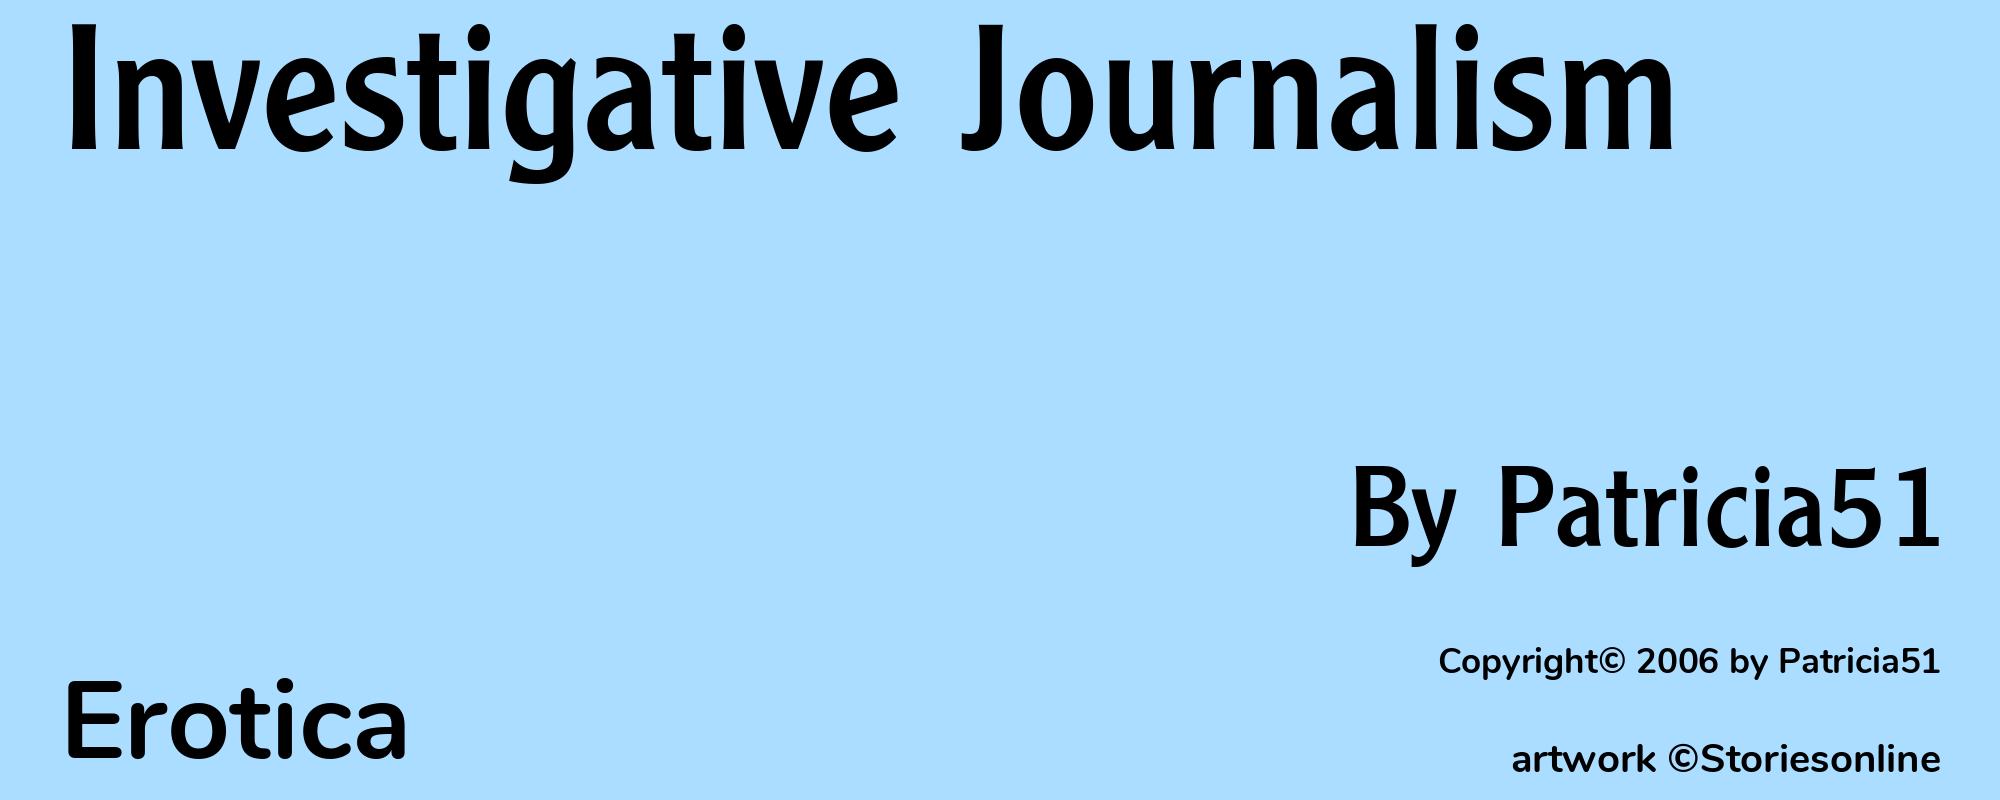 Investigative Journalism - Cover